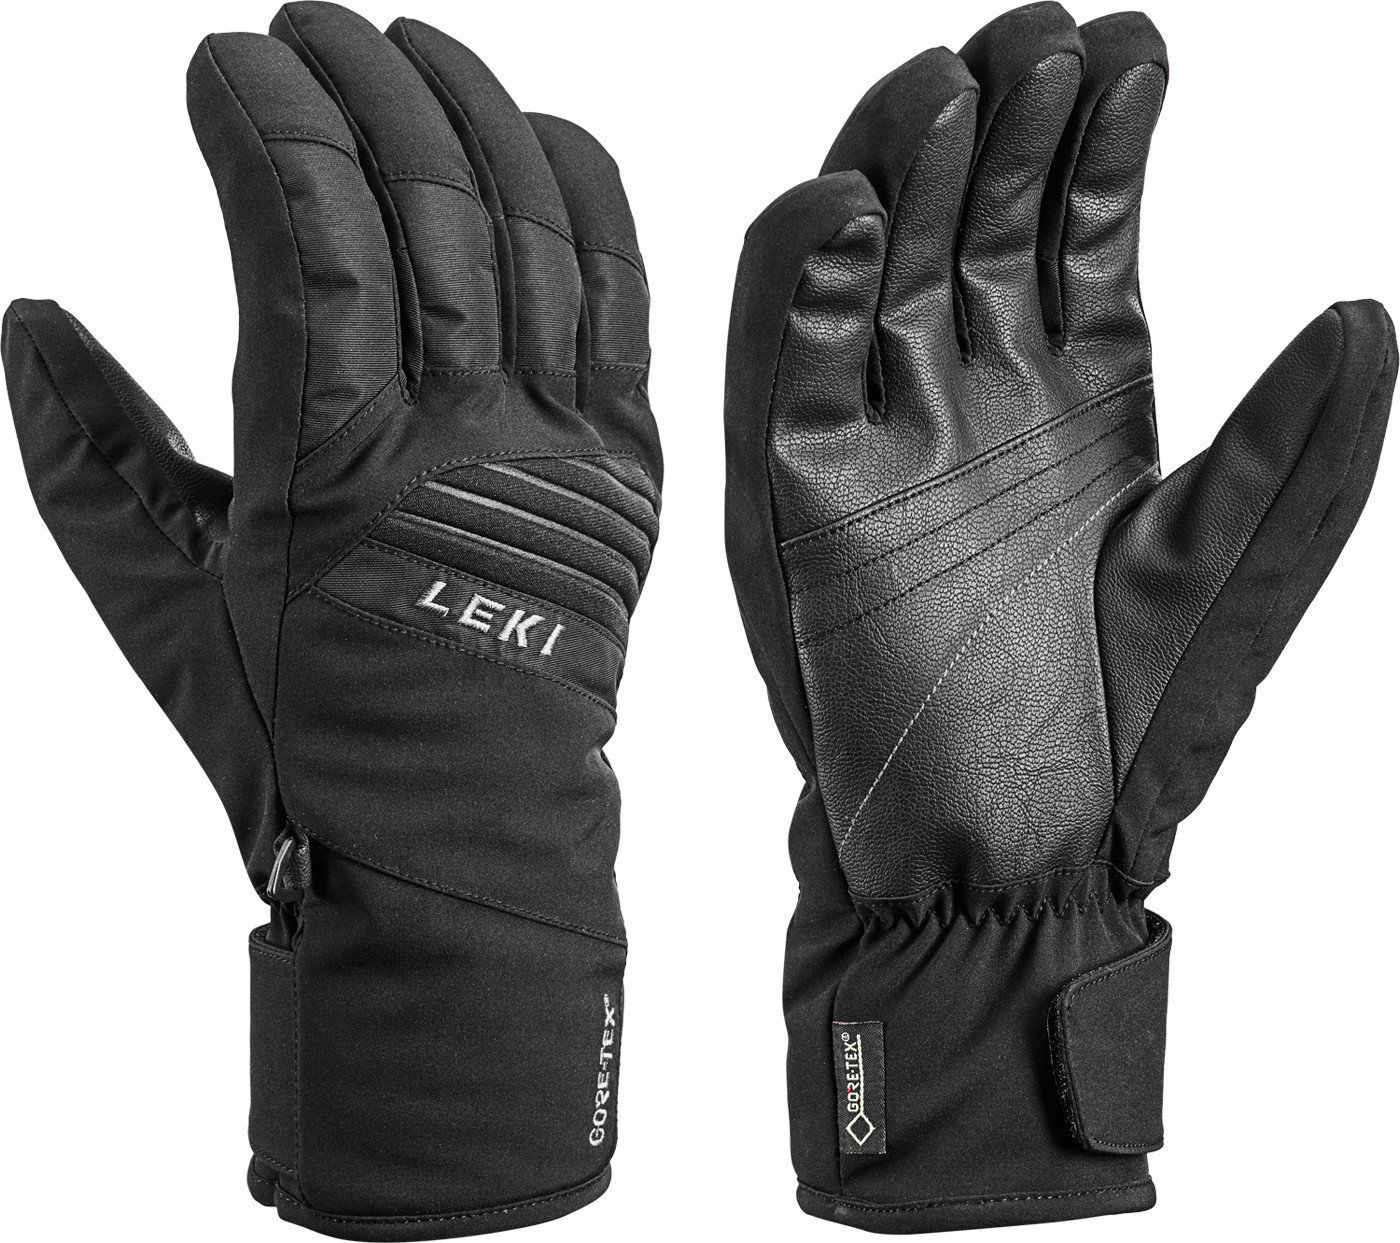 SkI Handschuhe Leki Space GTX Black 10 SkI Handschuhe